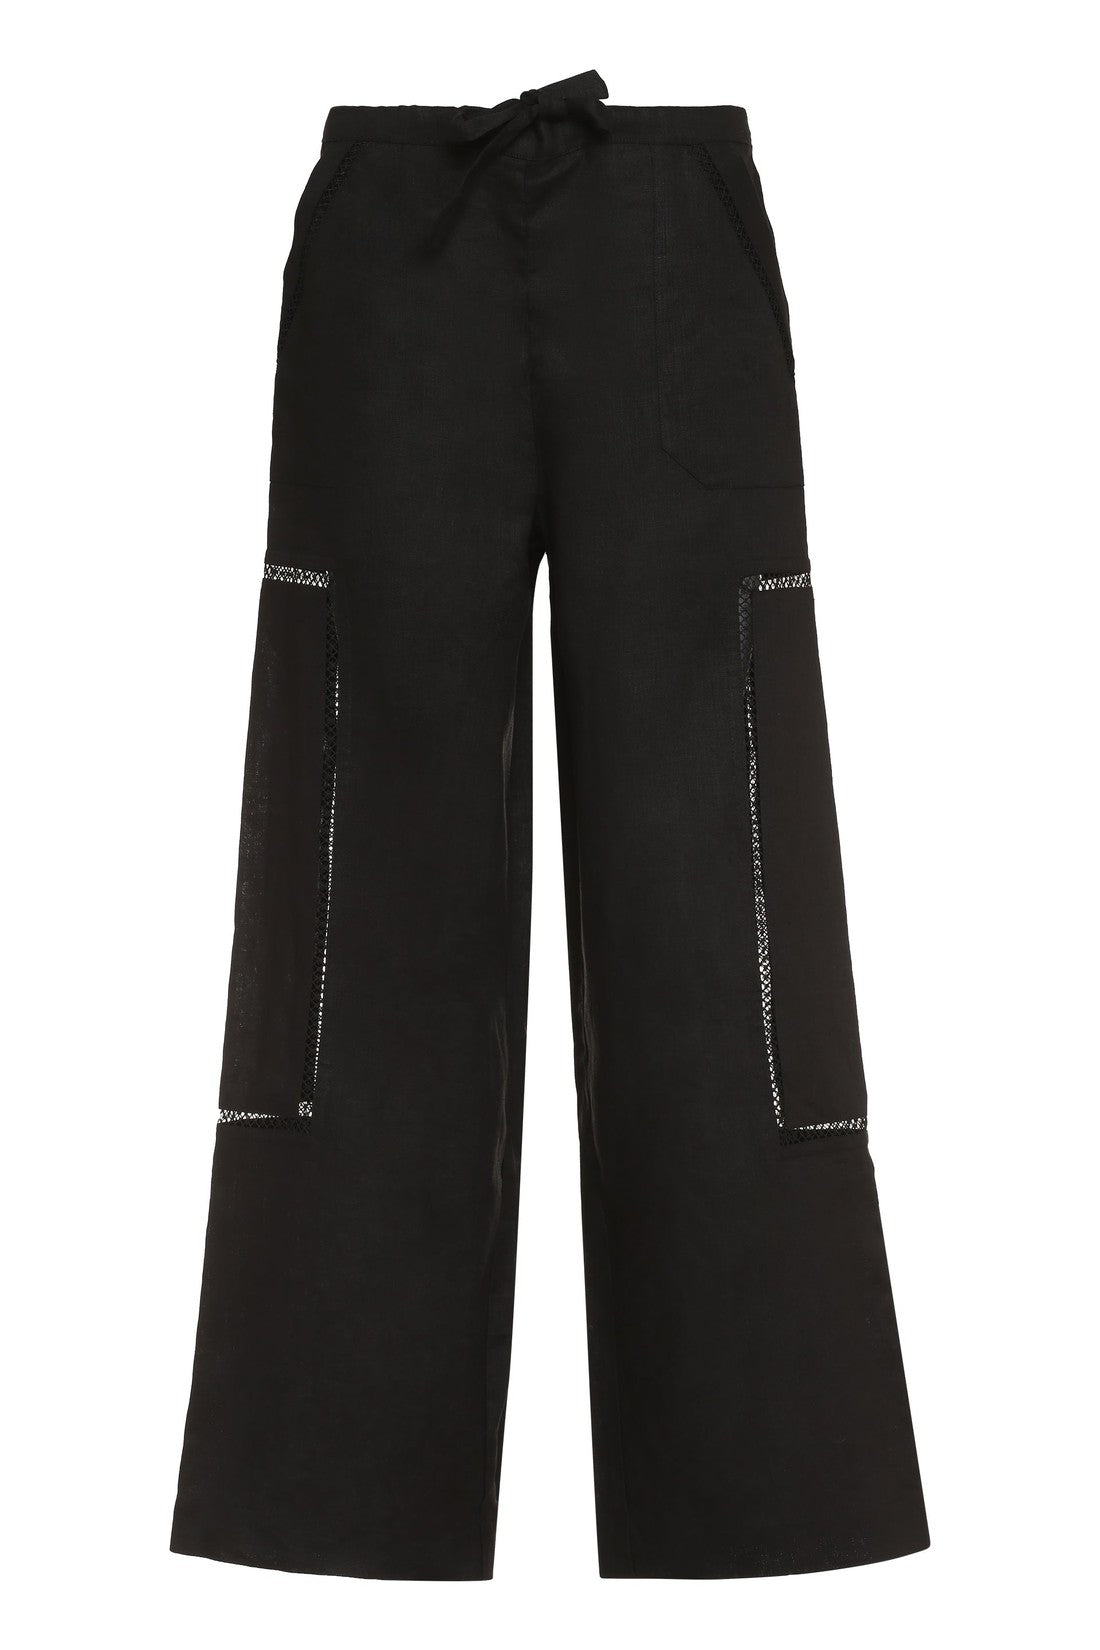 STAUD-OUTLET-SALE-Mackenzie linen trousers-ARCHIVIST